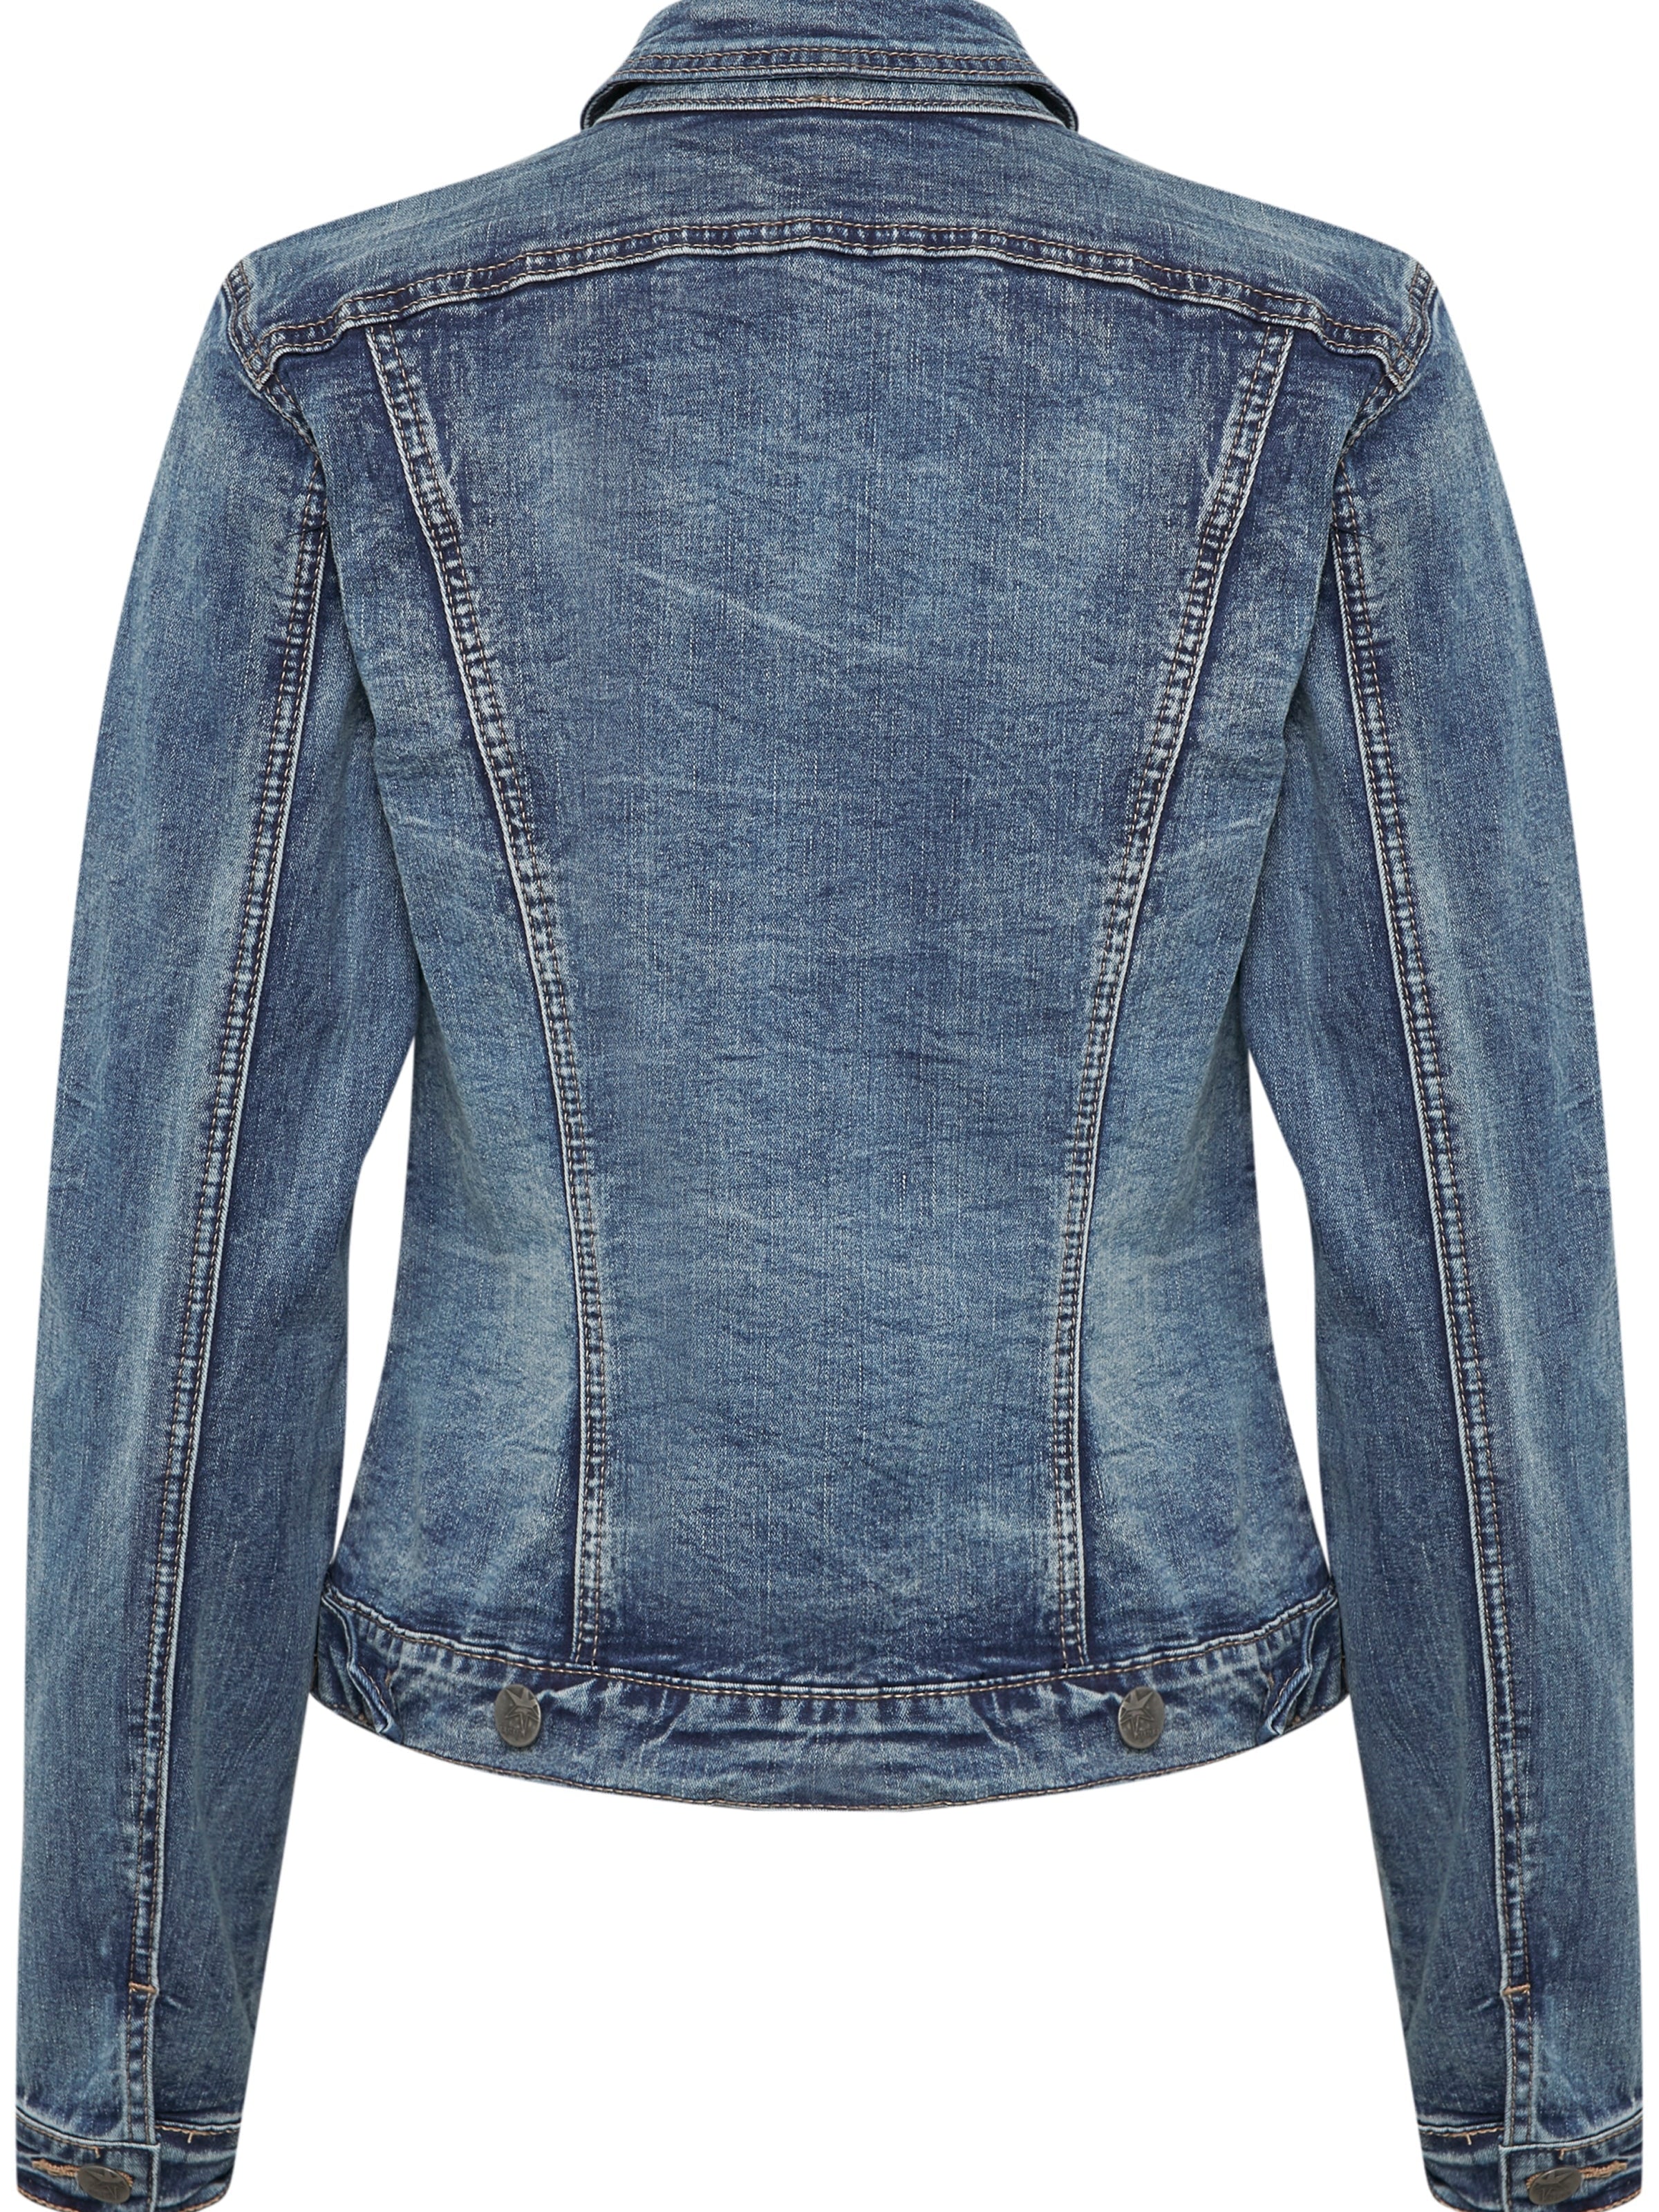 Culture CUalis denim jacket blue wash - Online-Mode